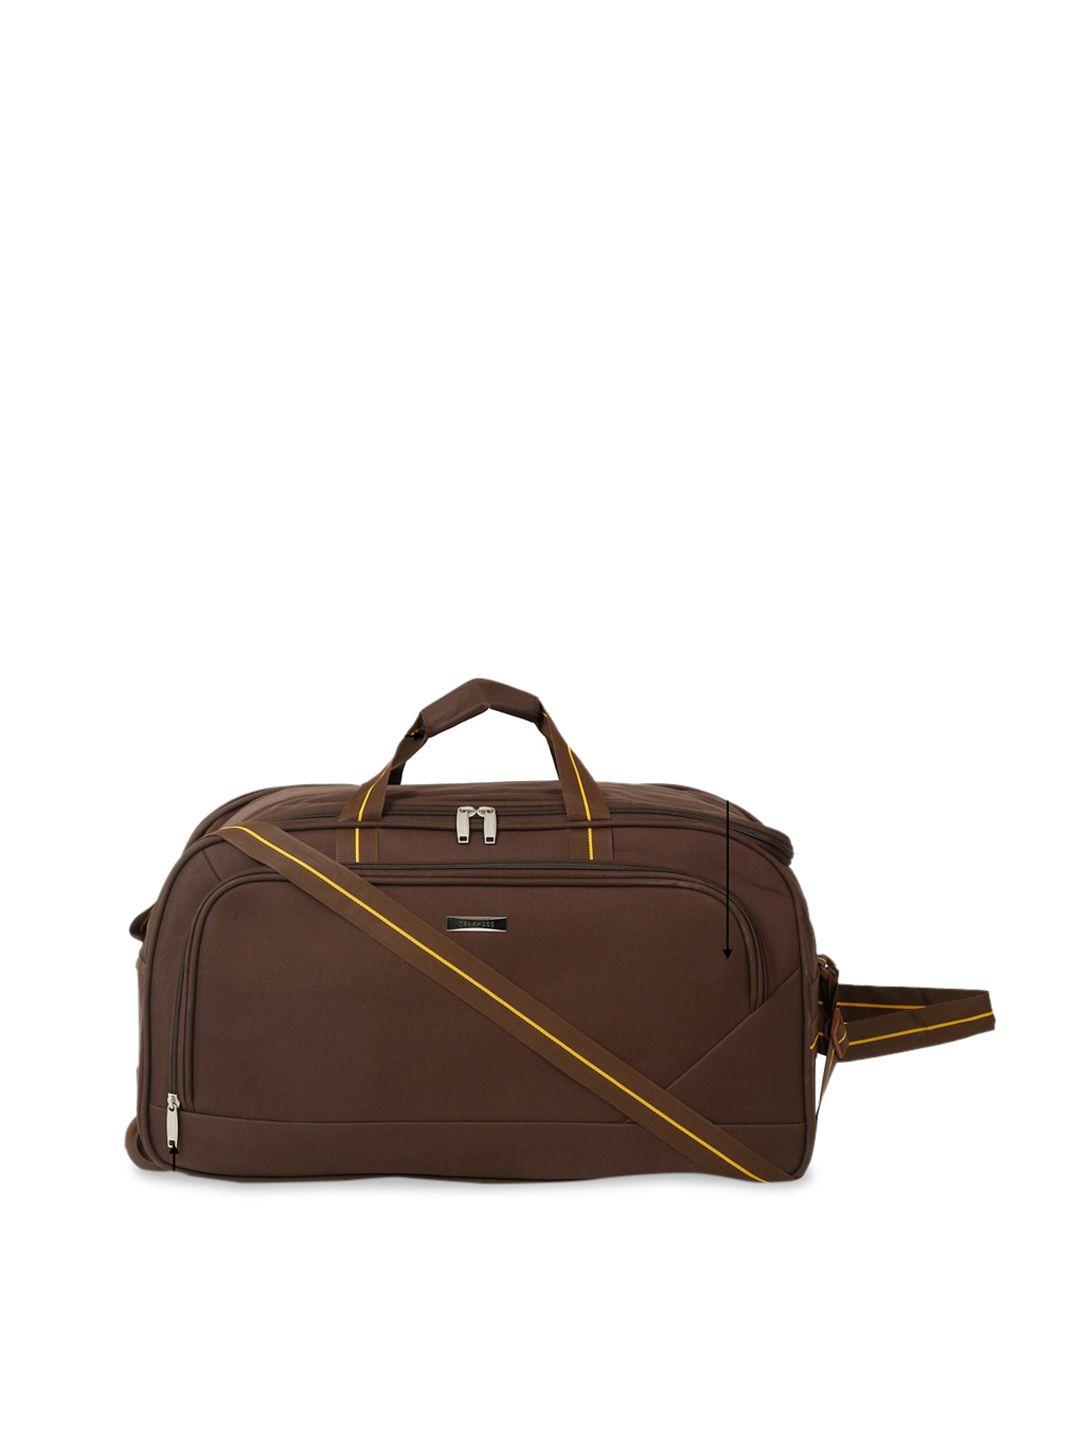 teakwood leathers small duffel bag